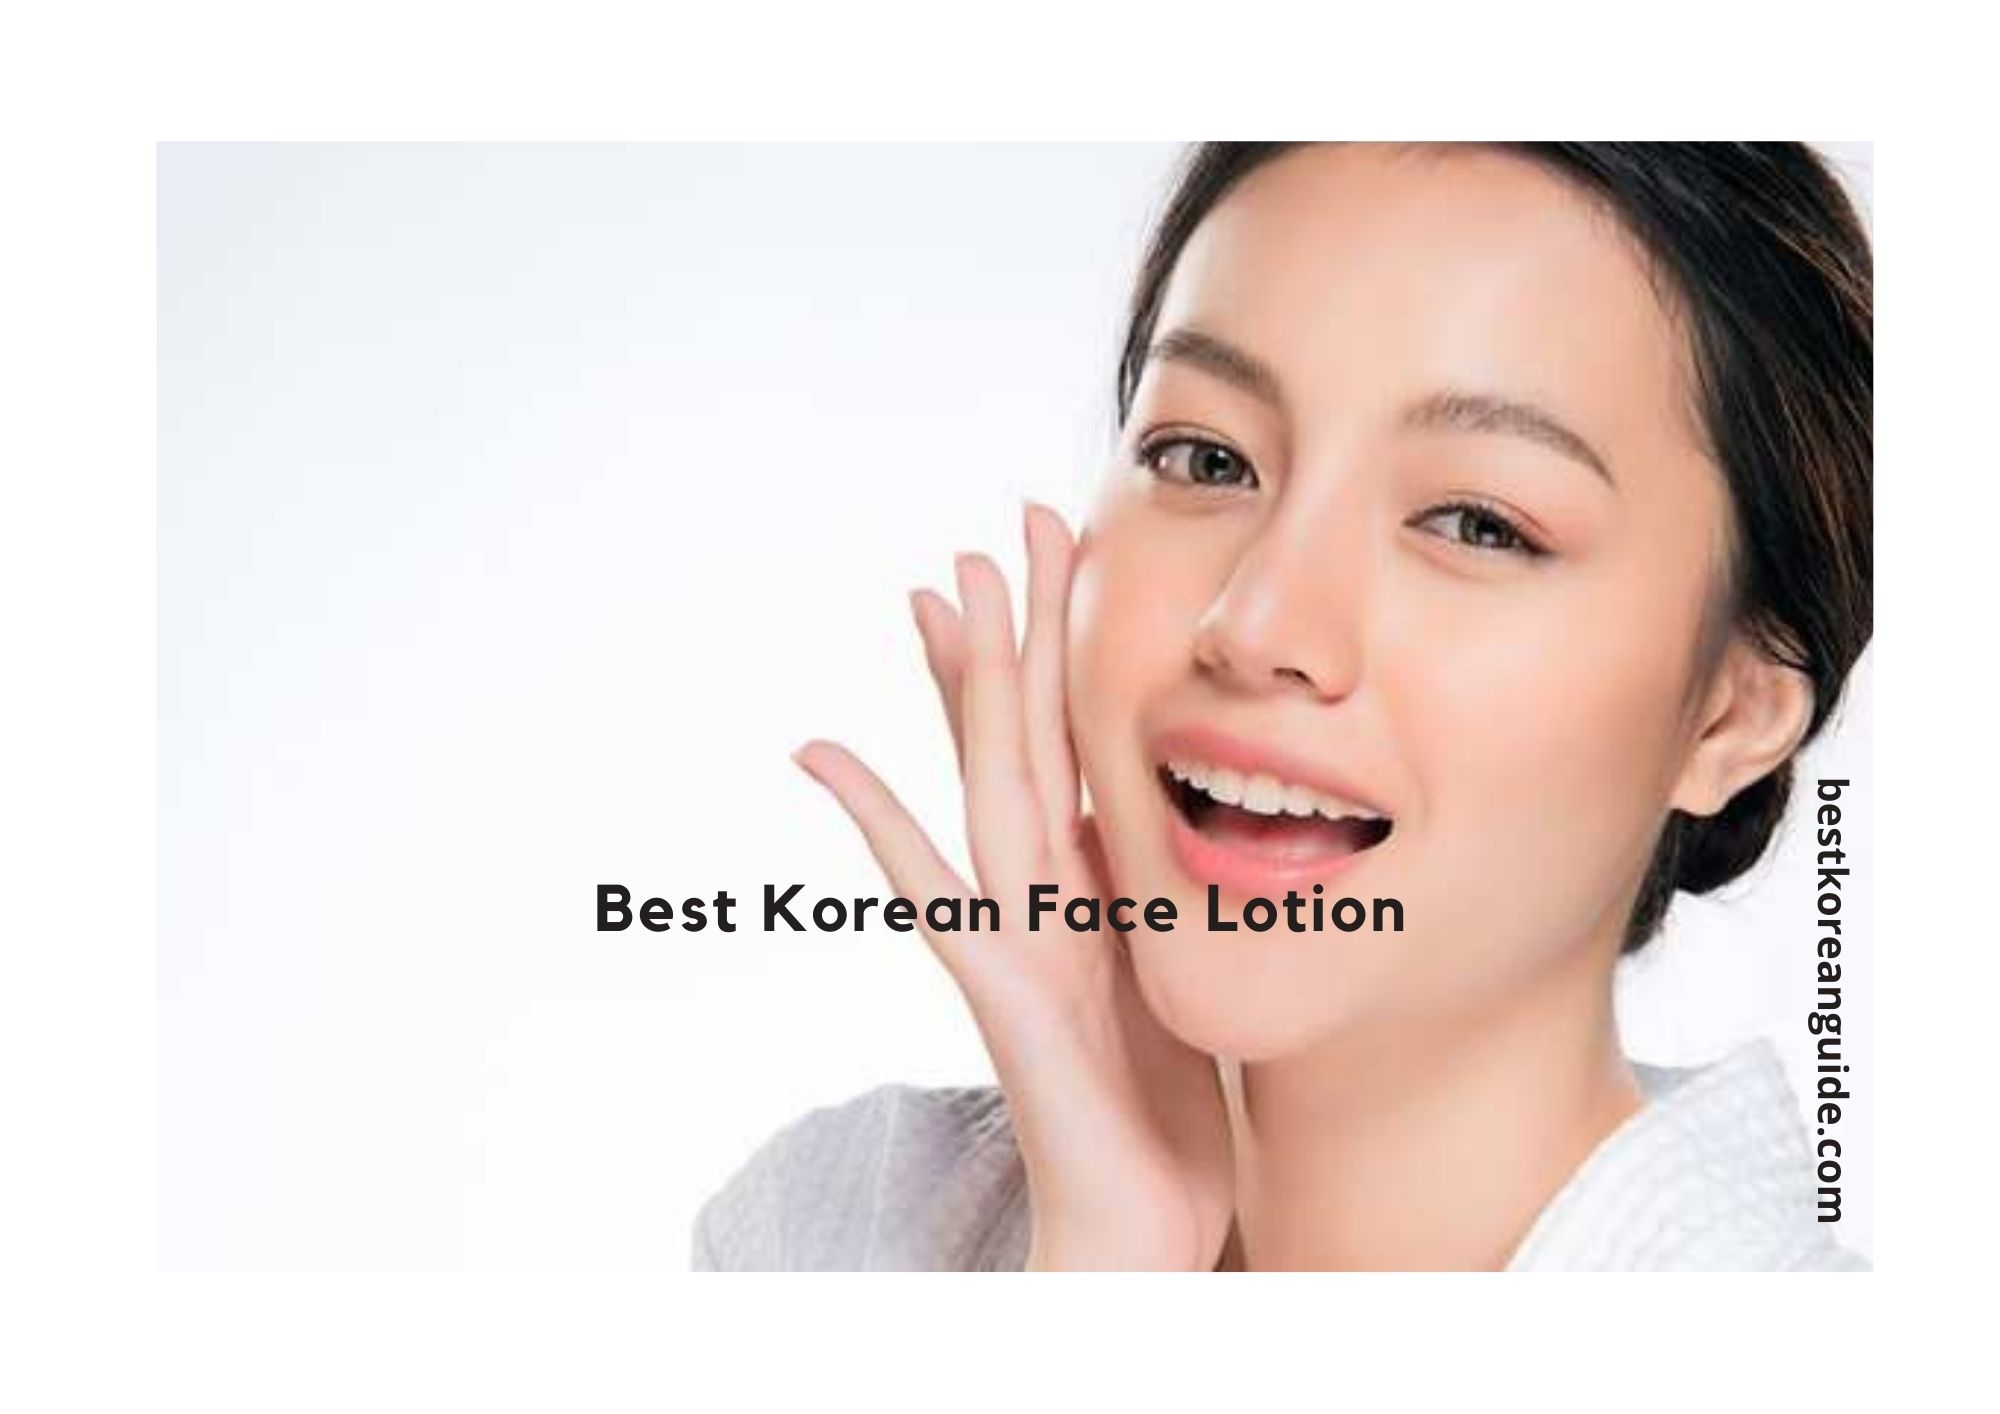 10 Best Korean Face Lotion